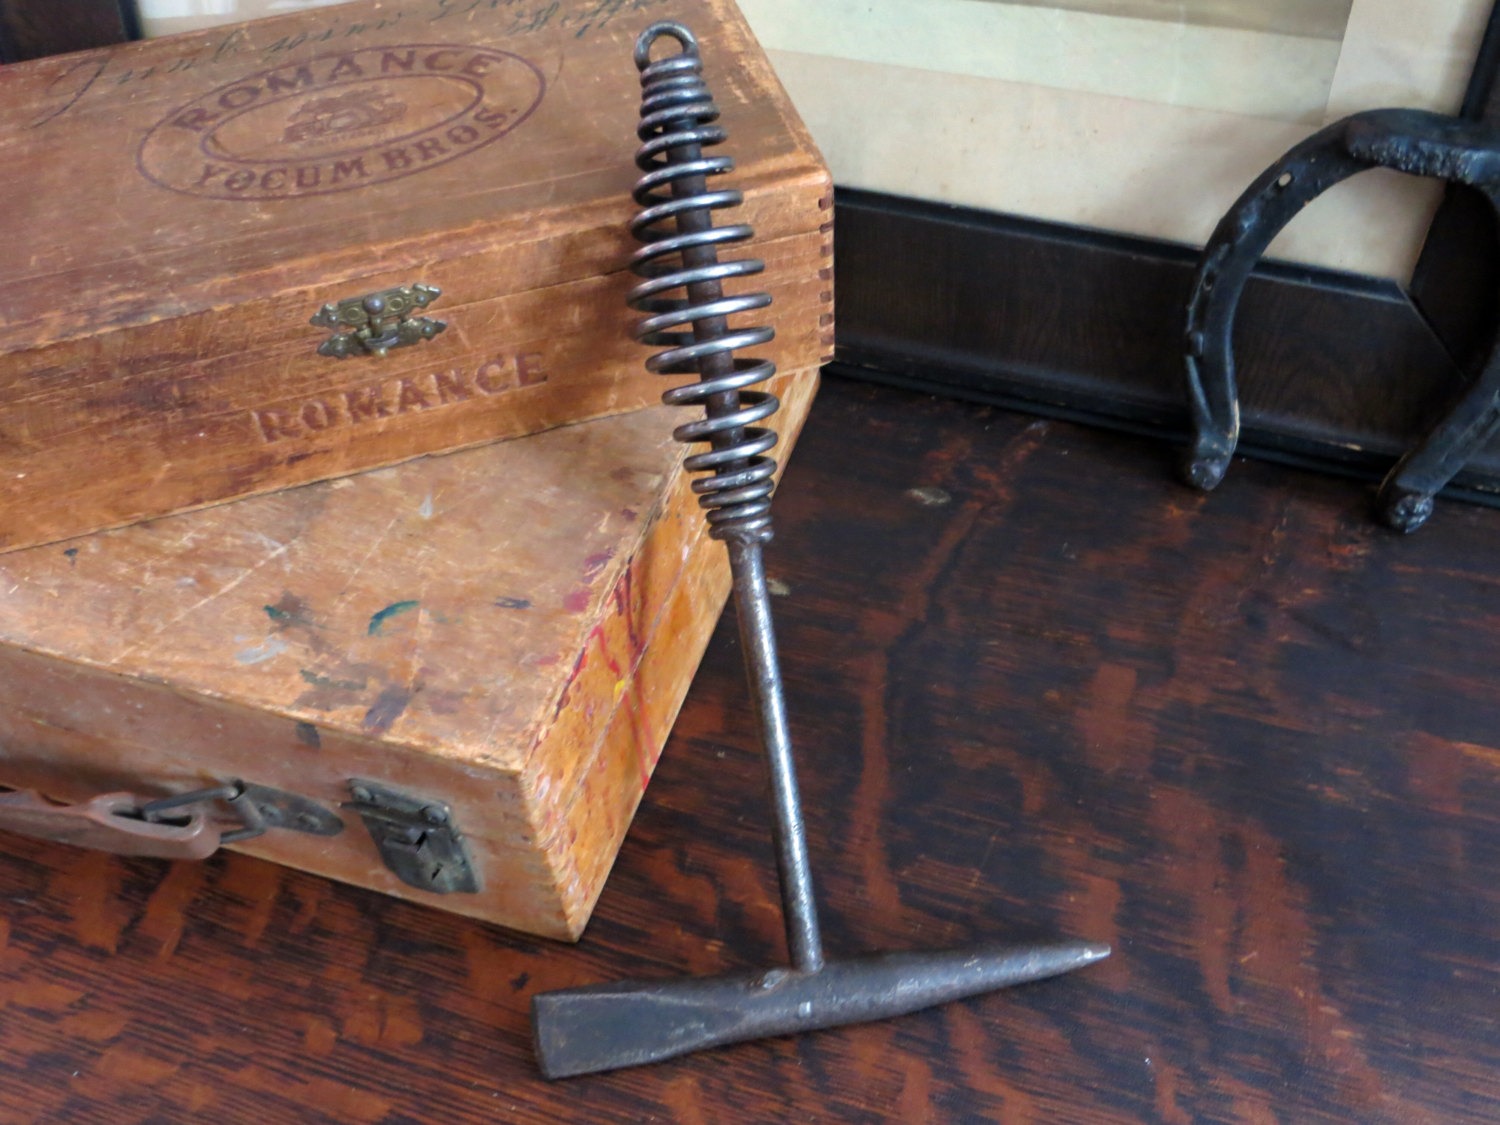 welding chisel & pick hammer with metal spring handle ~ 2 sided ~ vintage tool ~ hammer ~ vintage industrial tool steampunk buy now online